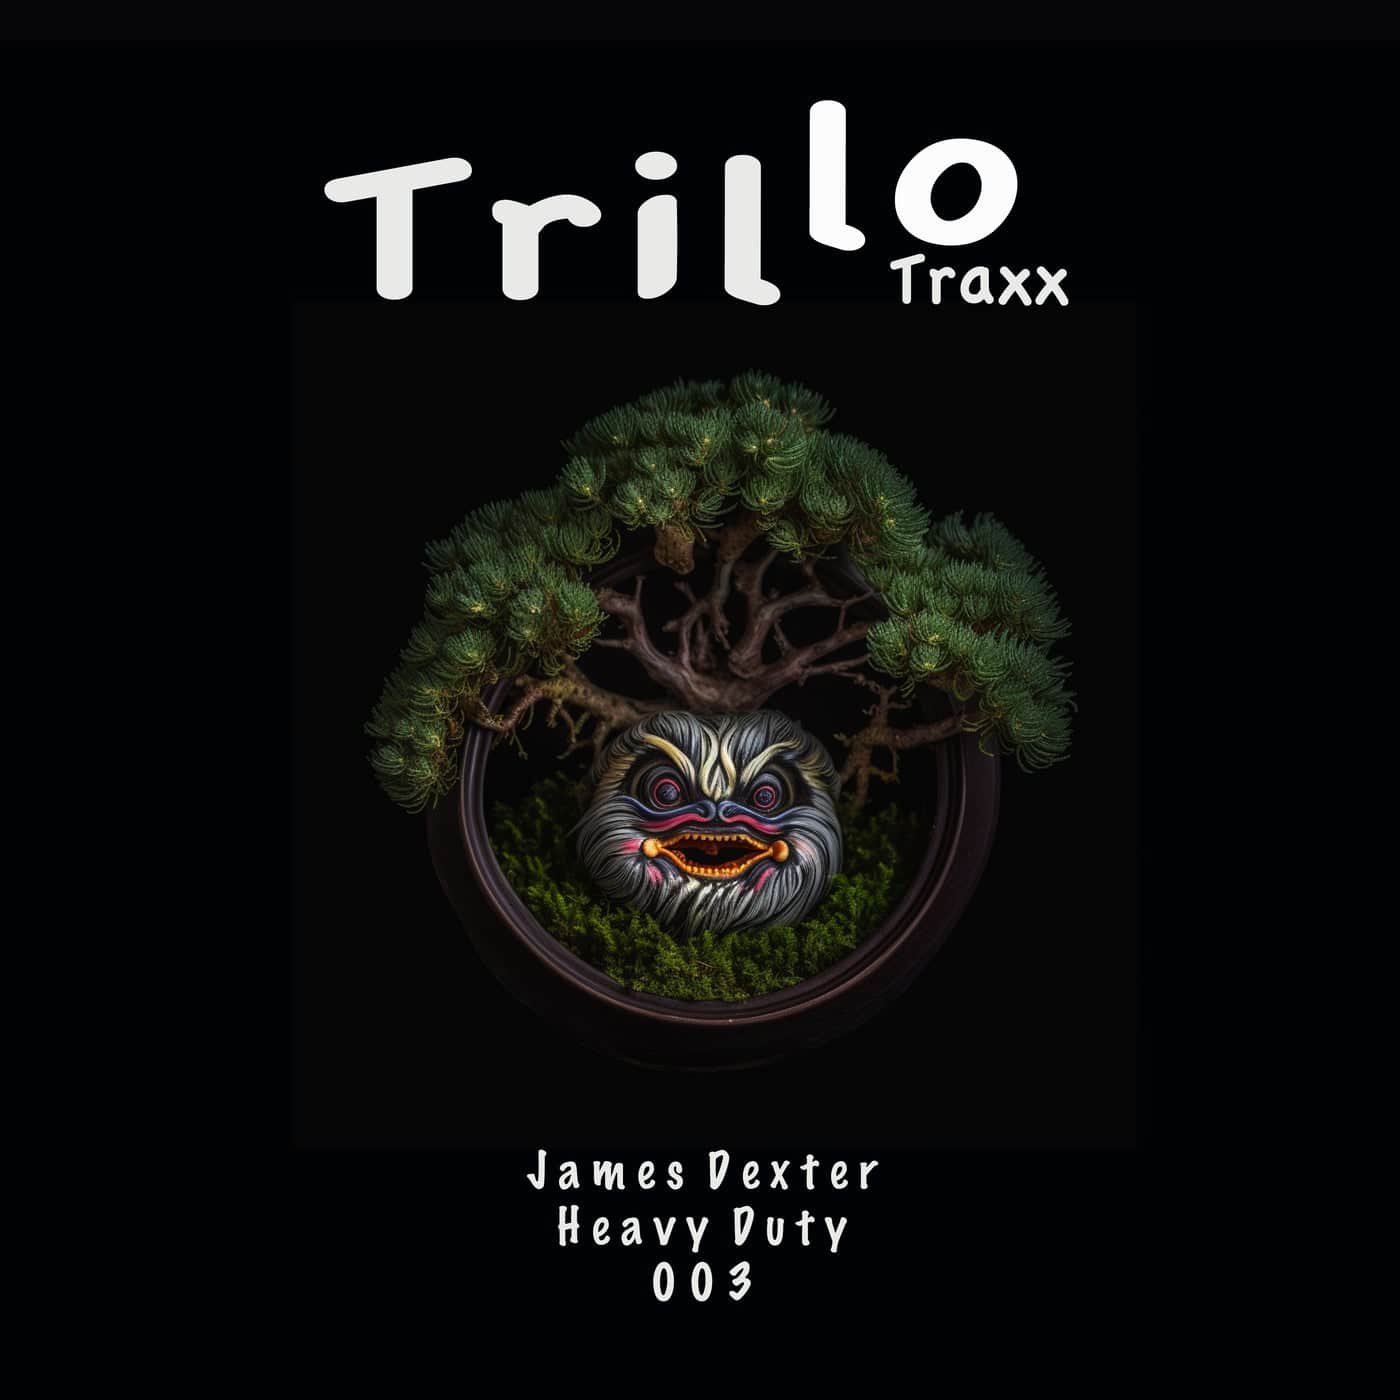 image cover: James Dexter - Heavy Duty on Trillo Traxx